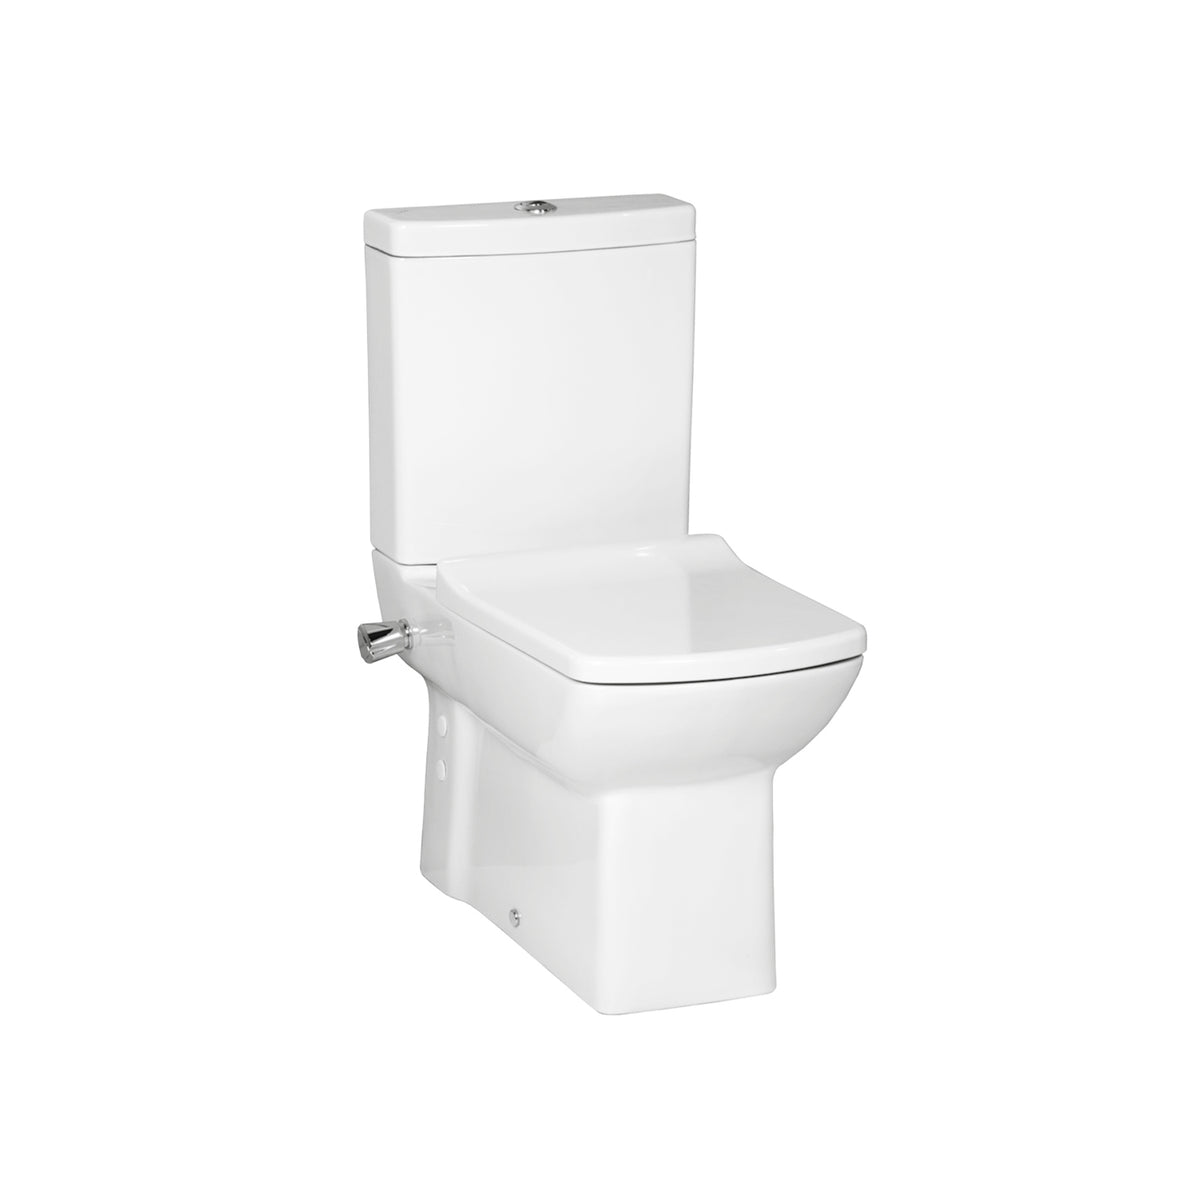 Creavit Lara Close Coupled Toilet with Bidet & Integrated Con